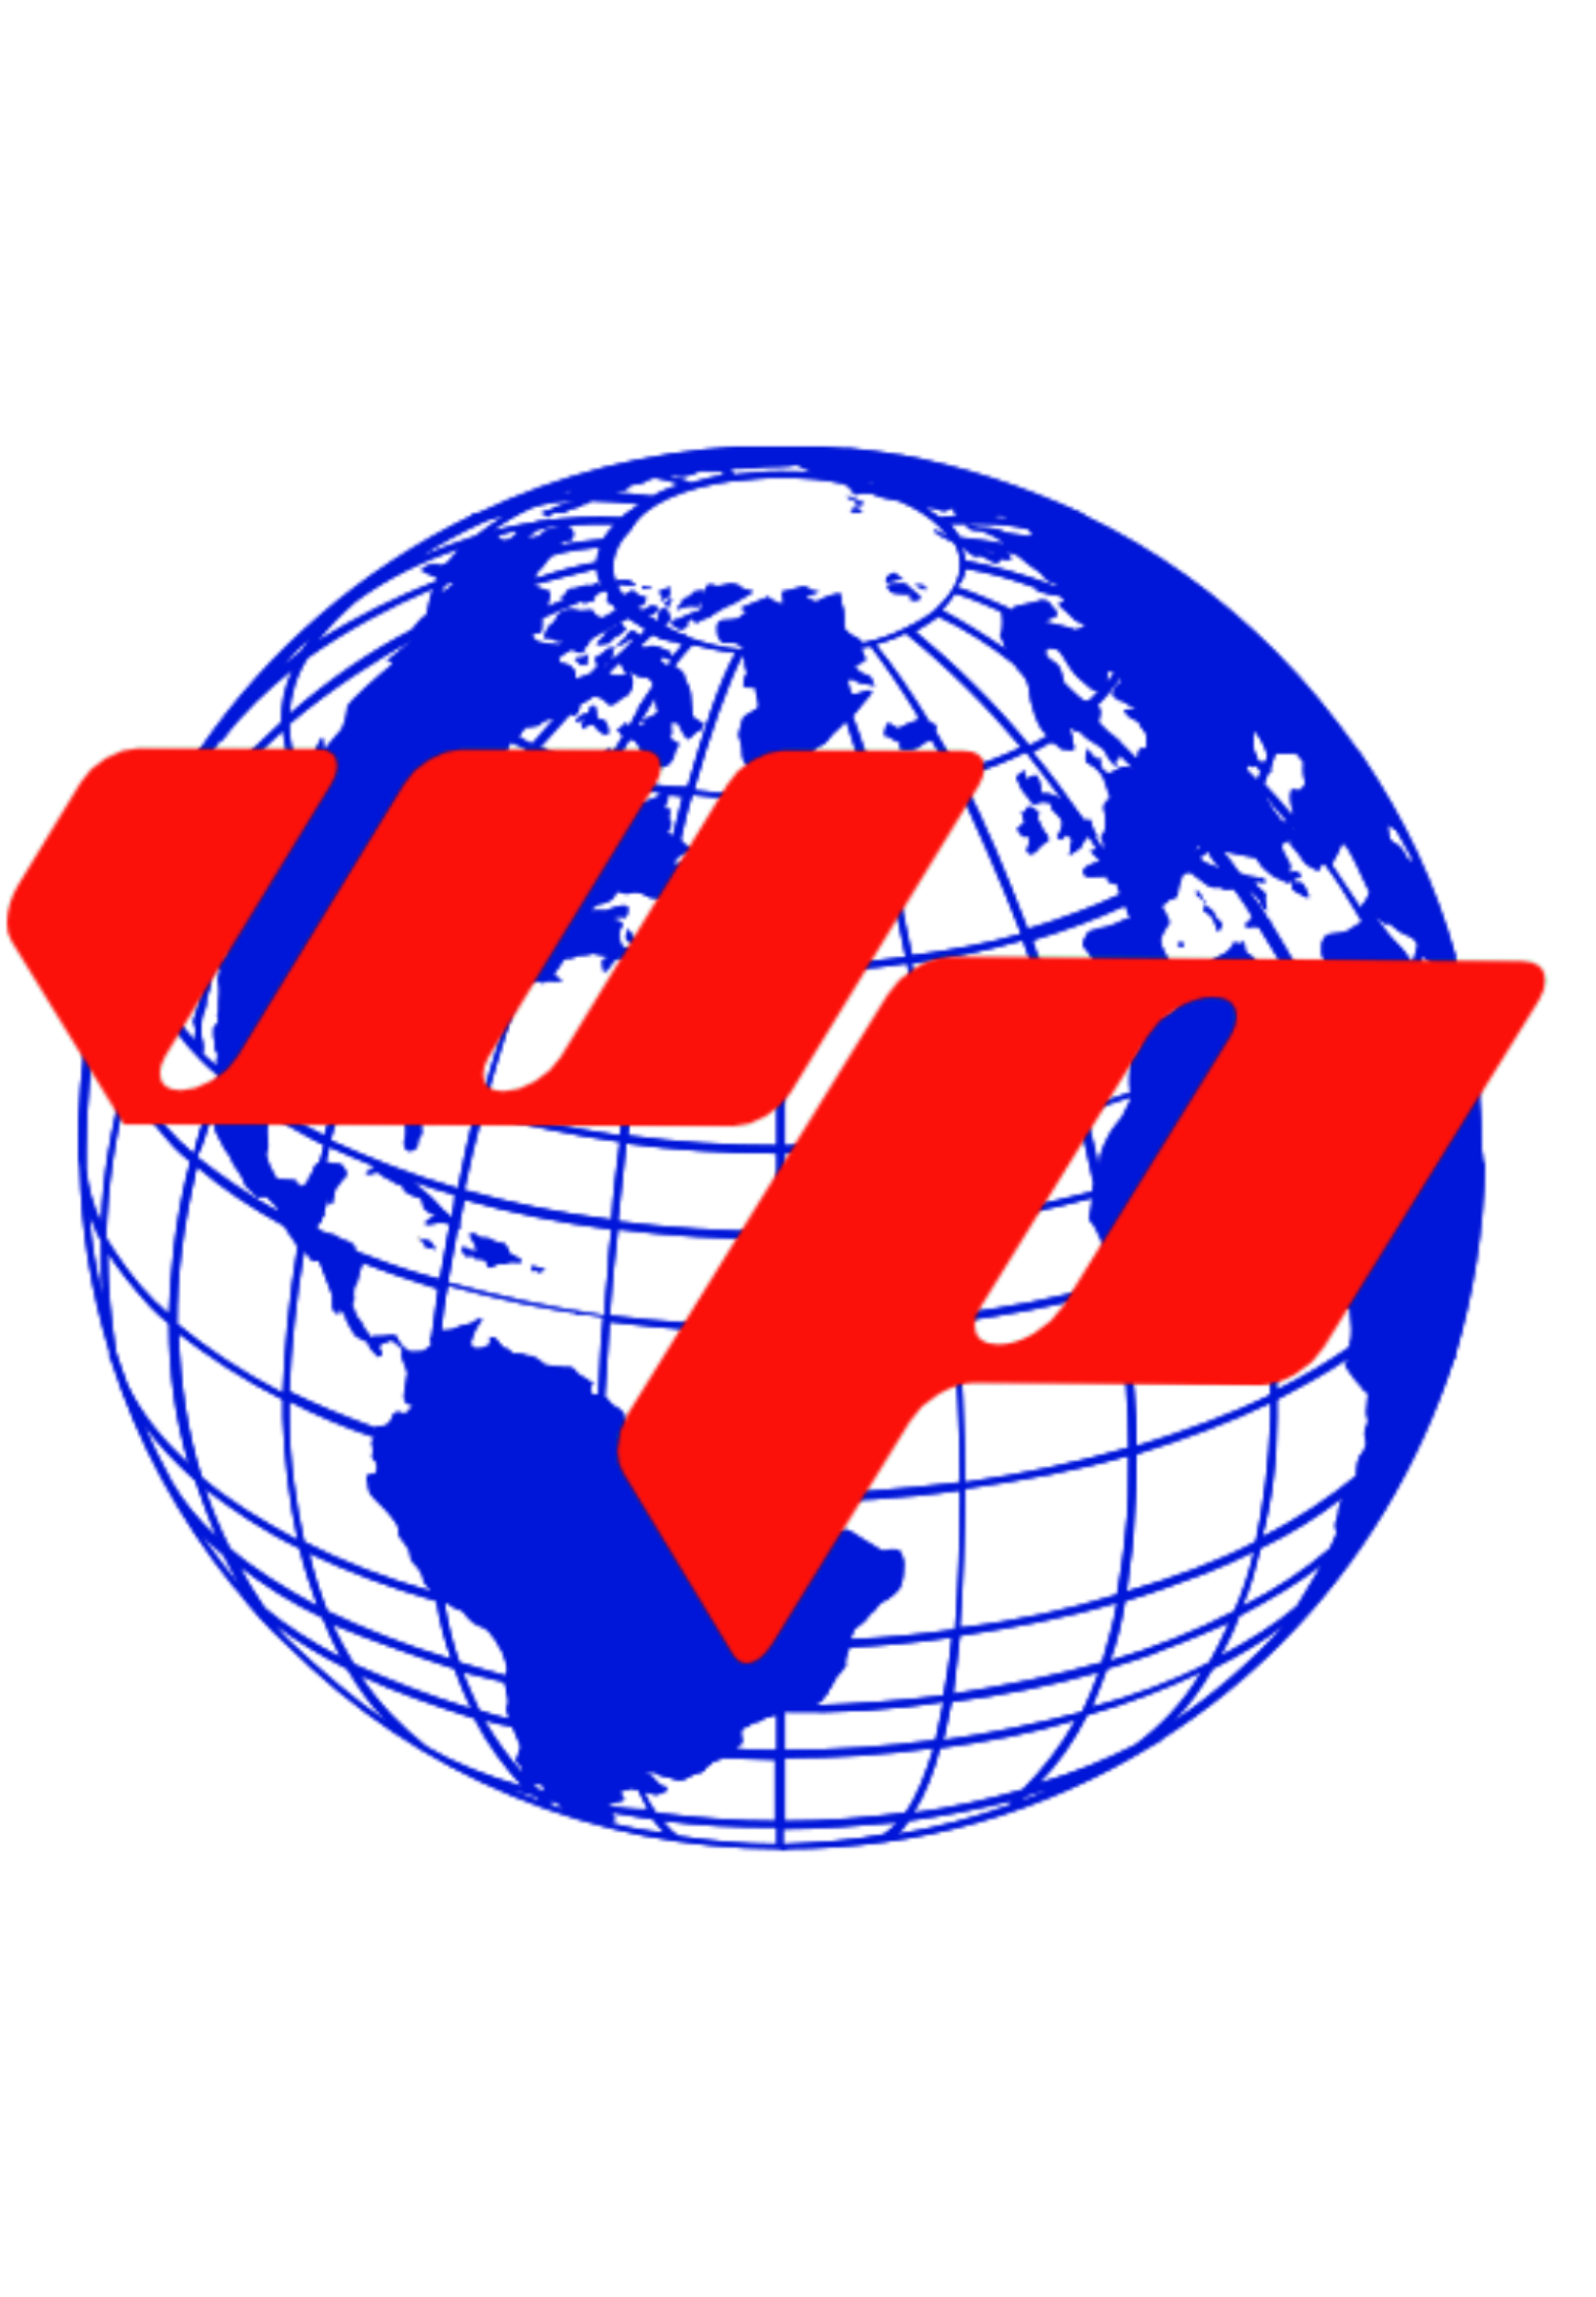 vip industries logo